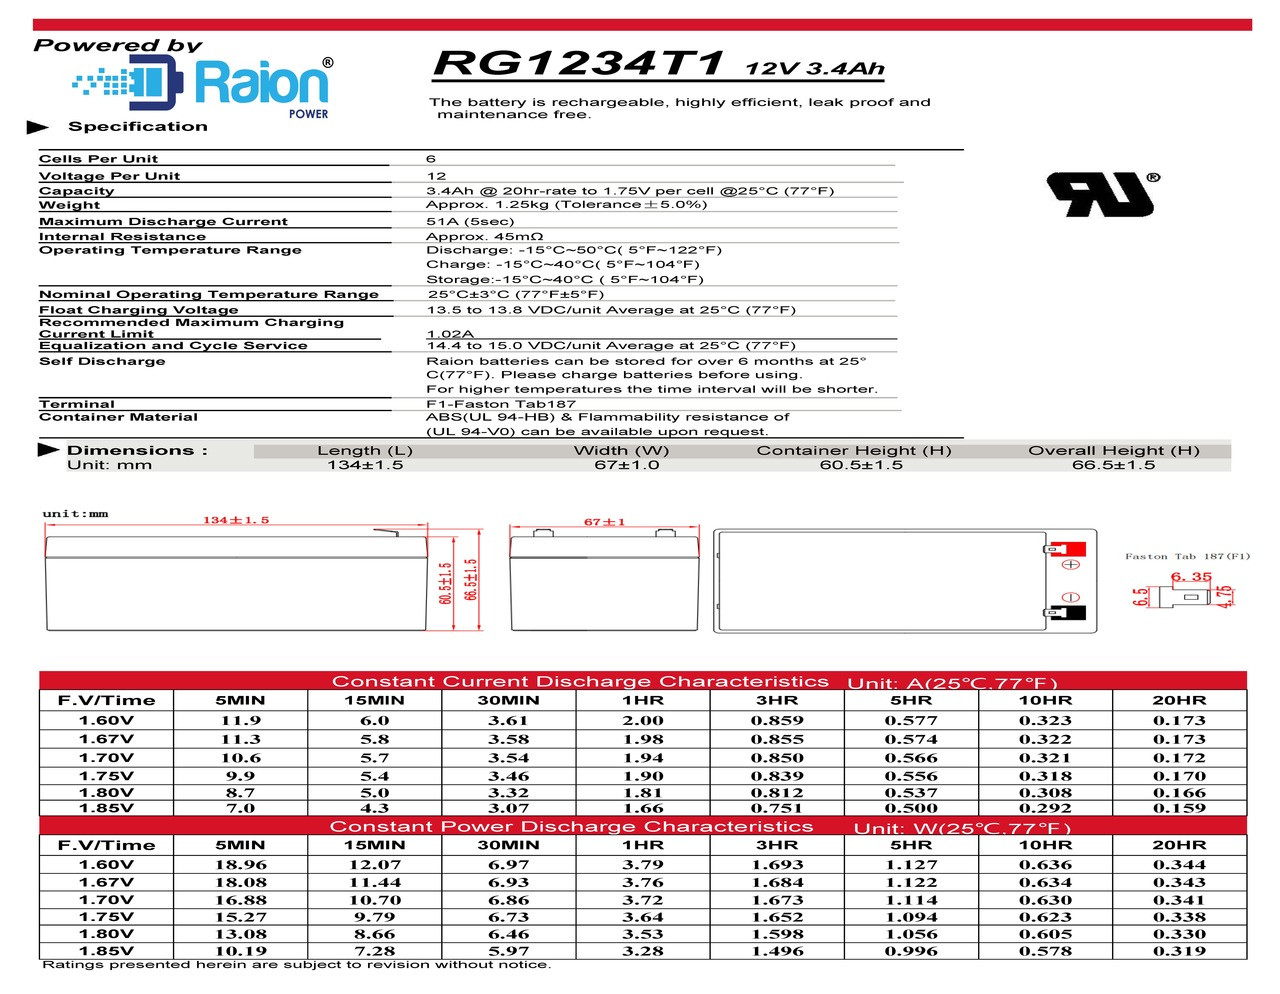 Raion Power RG1234T1 12V 3.4Ah Battery Data Sheet for Criticare Systems 506 Monitor-Non Invasive